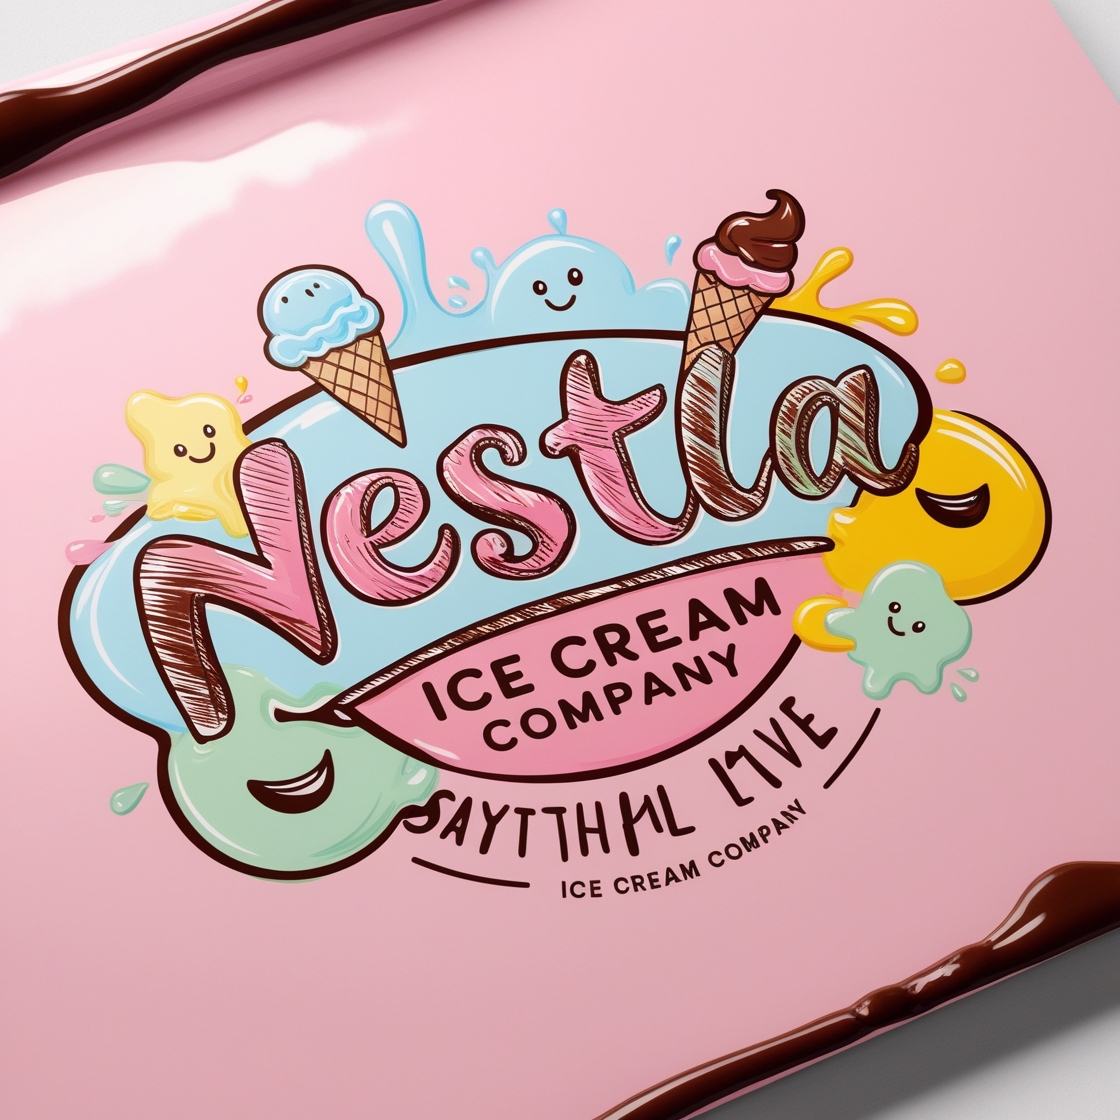 Default_A_logo_for_the_Nestla_ice_cream_company_is_beautifully_2.jpg